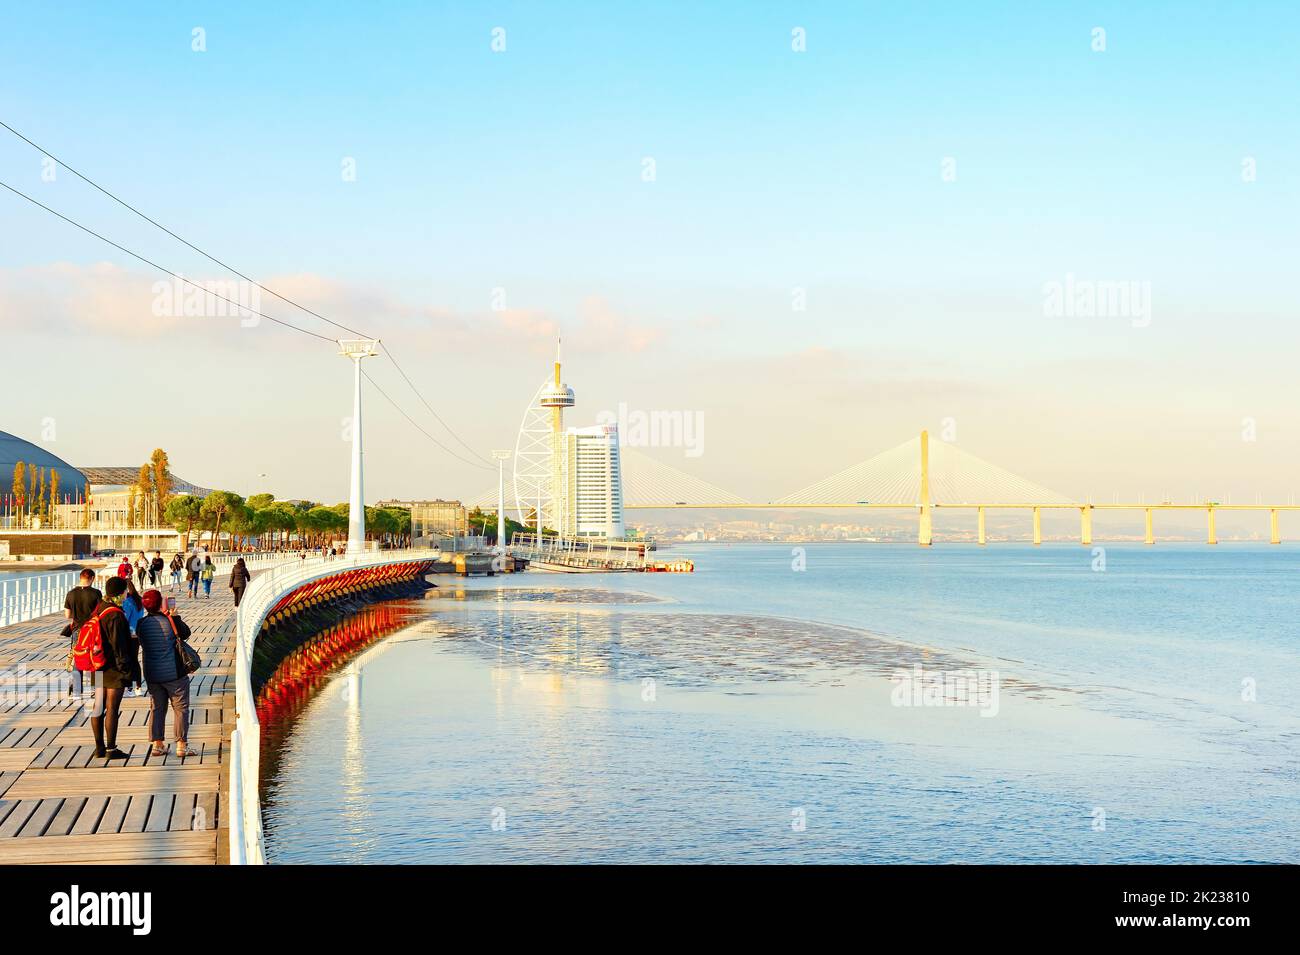 LISBON, PORTUGAL - NOVEMBER 11, 2021: Vasco da Gama bridge and hotel of modern futuristic architecture, people at promenade in sunset light, Lisbon, P Stock Photo